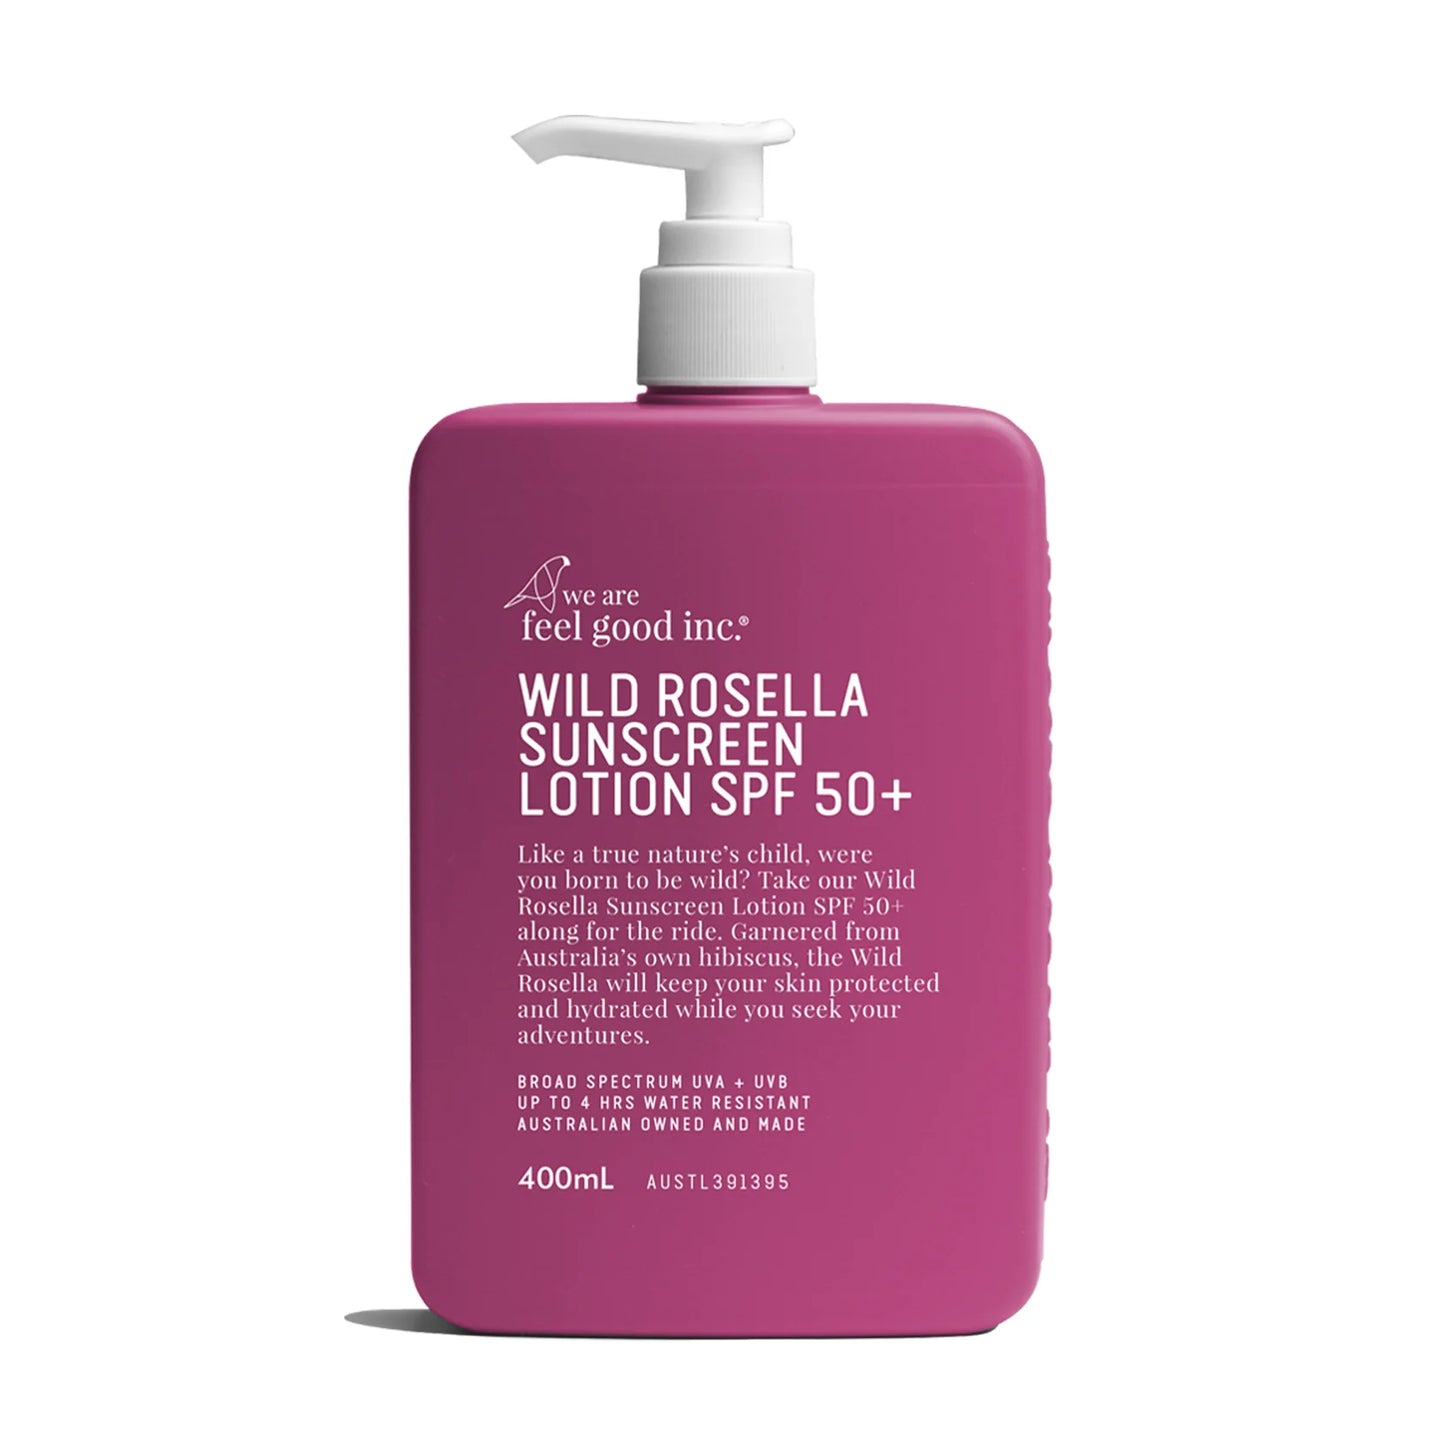 WAFG // Wild Rosella Sunscreen Lotion SPF 50+